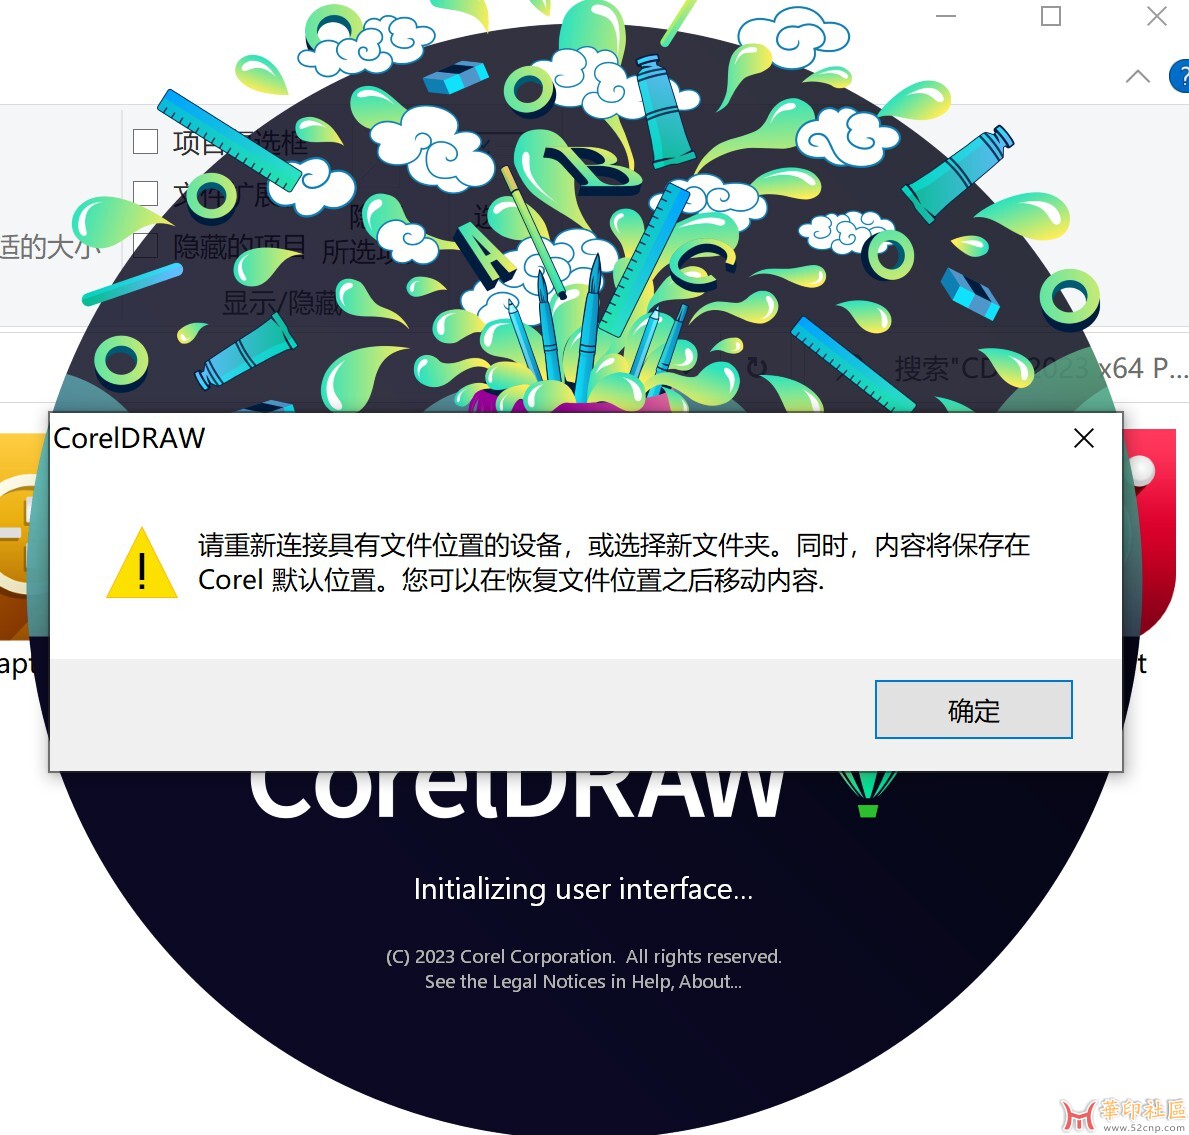 CorelDRAW 2023纯绿色插件版 解压后直接运行,无需安装!!!{tag}(3)